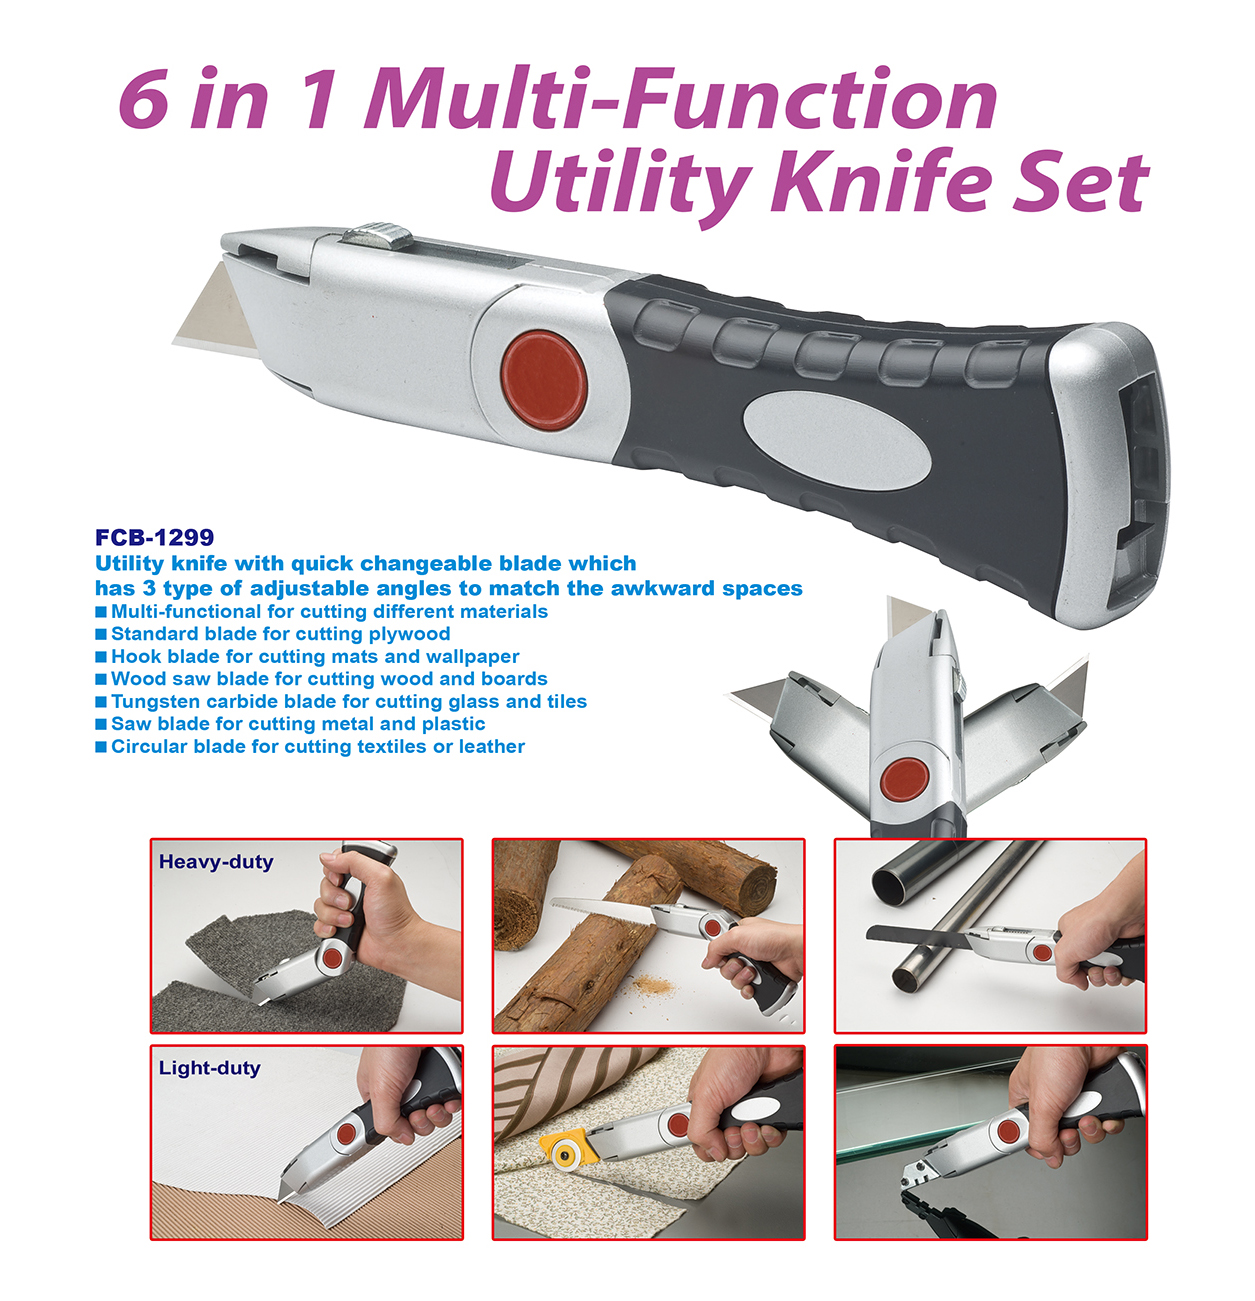 6 in 1 Multi-Function Utility Knife Set